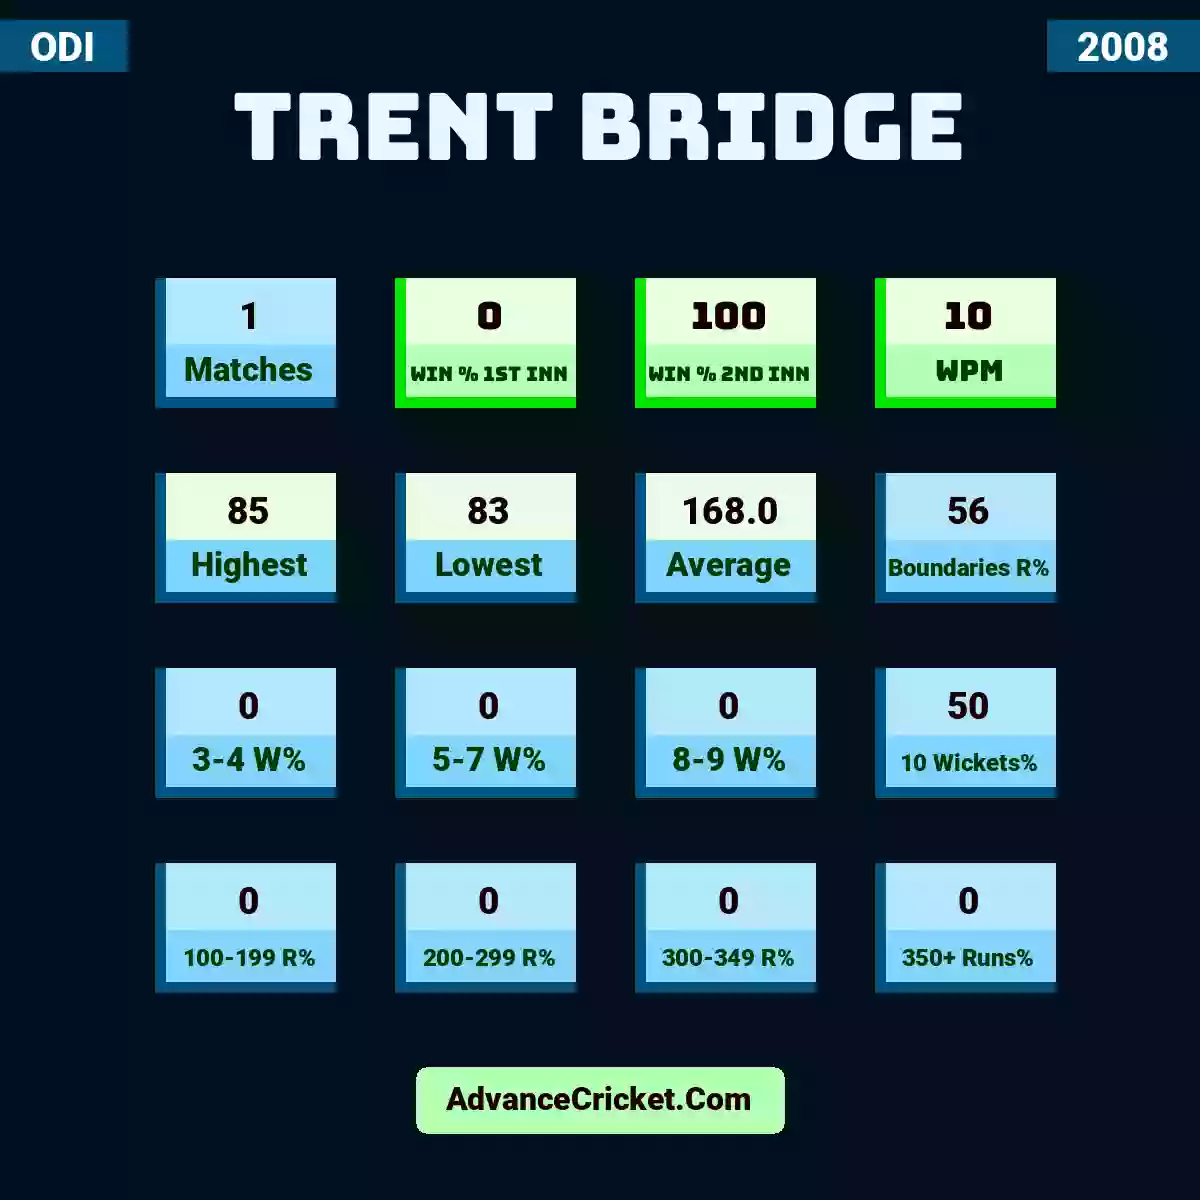 Image showing Trent Bridge with Matches: 1, Win % 1st Inn: 0, Win % 2nd Inn: 100, WPM: 10, Highest: 85, Lowest: 83, Average: 168.0, Boundaries R%: 56, 3-4 W%: 0, 5-7 W%: 0, 8-9 W%: 0, 10 Wickets%: 50, 100-199 R%: 0, 200-299 R%: 0, 300-349 R%: 0, 350+ Runs%: 0.